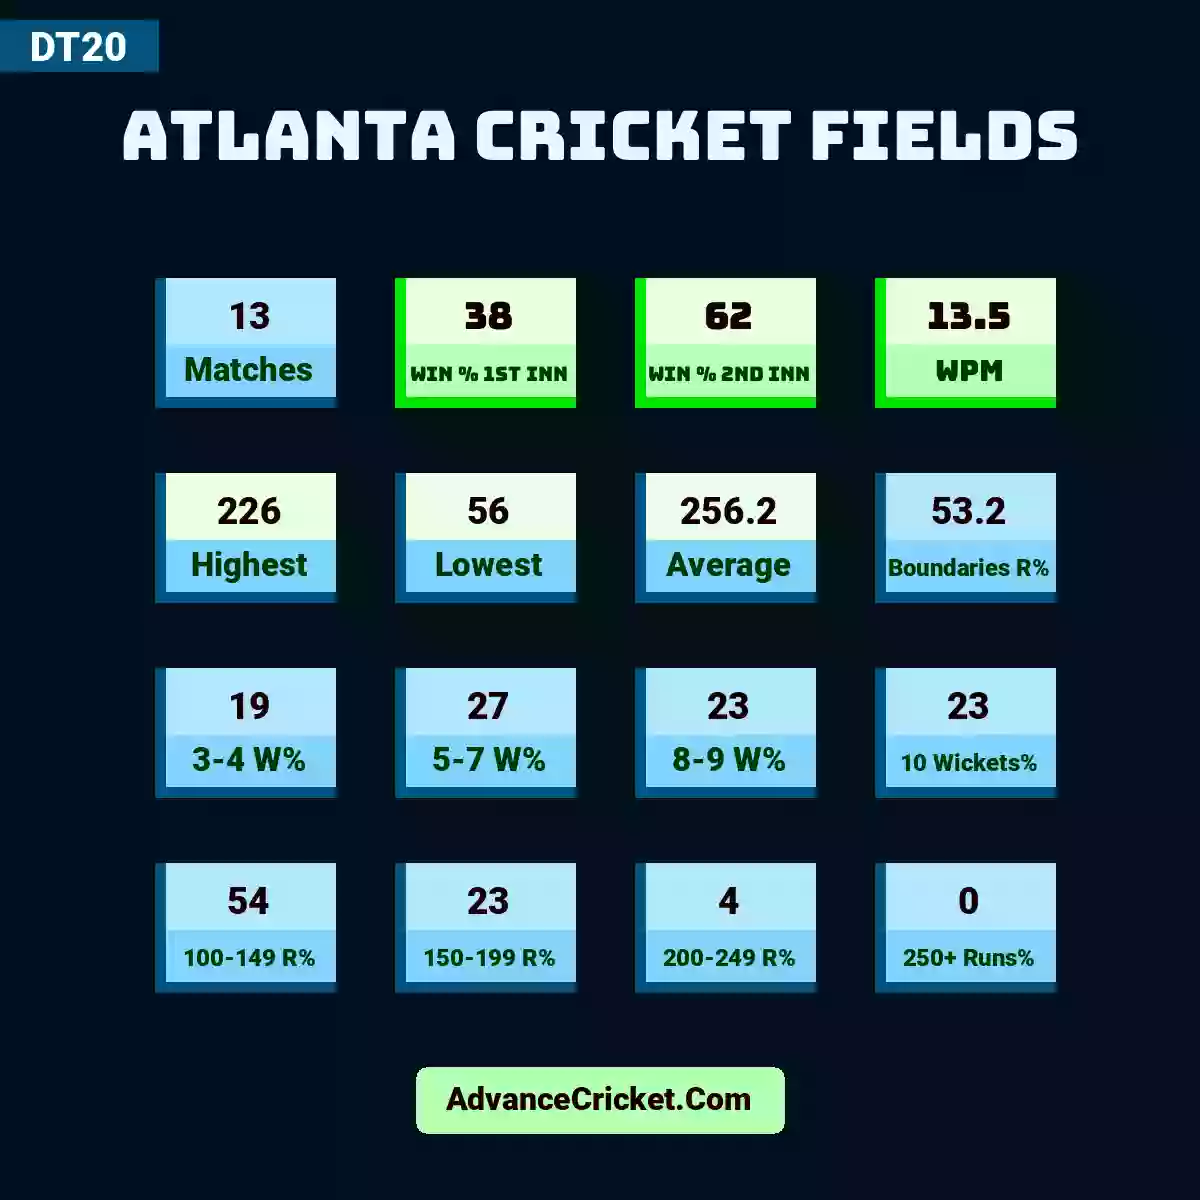 Image showing Atlanta Cricket Fields with Matches: 13, Win % 1st Inn: 38, Win % 2nd Inn: 62, WPM: 13.5, Highest: 226, Lowest: 56, Average: 256.2, Boundaries R%: 53.2, 3-4 W%: 19, 5-7 W%: 27, 8-9 W%: 23, 10 Wickets%: 23, 100-149 R%: 54, 150-199 R%: 23, 200-249 R%: 4, 250+ Runs%: 0.